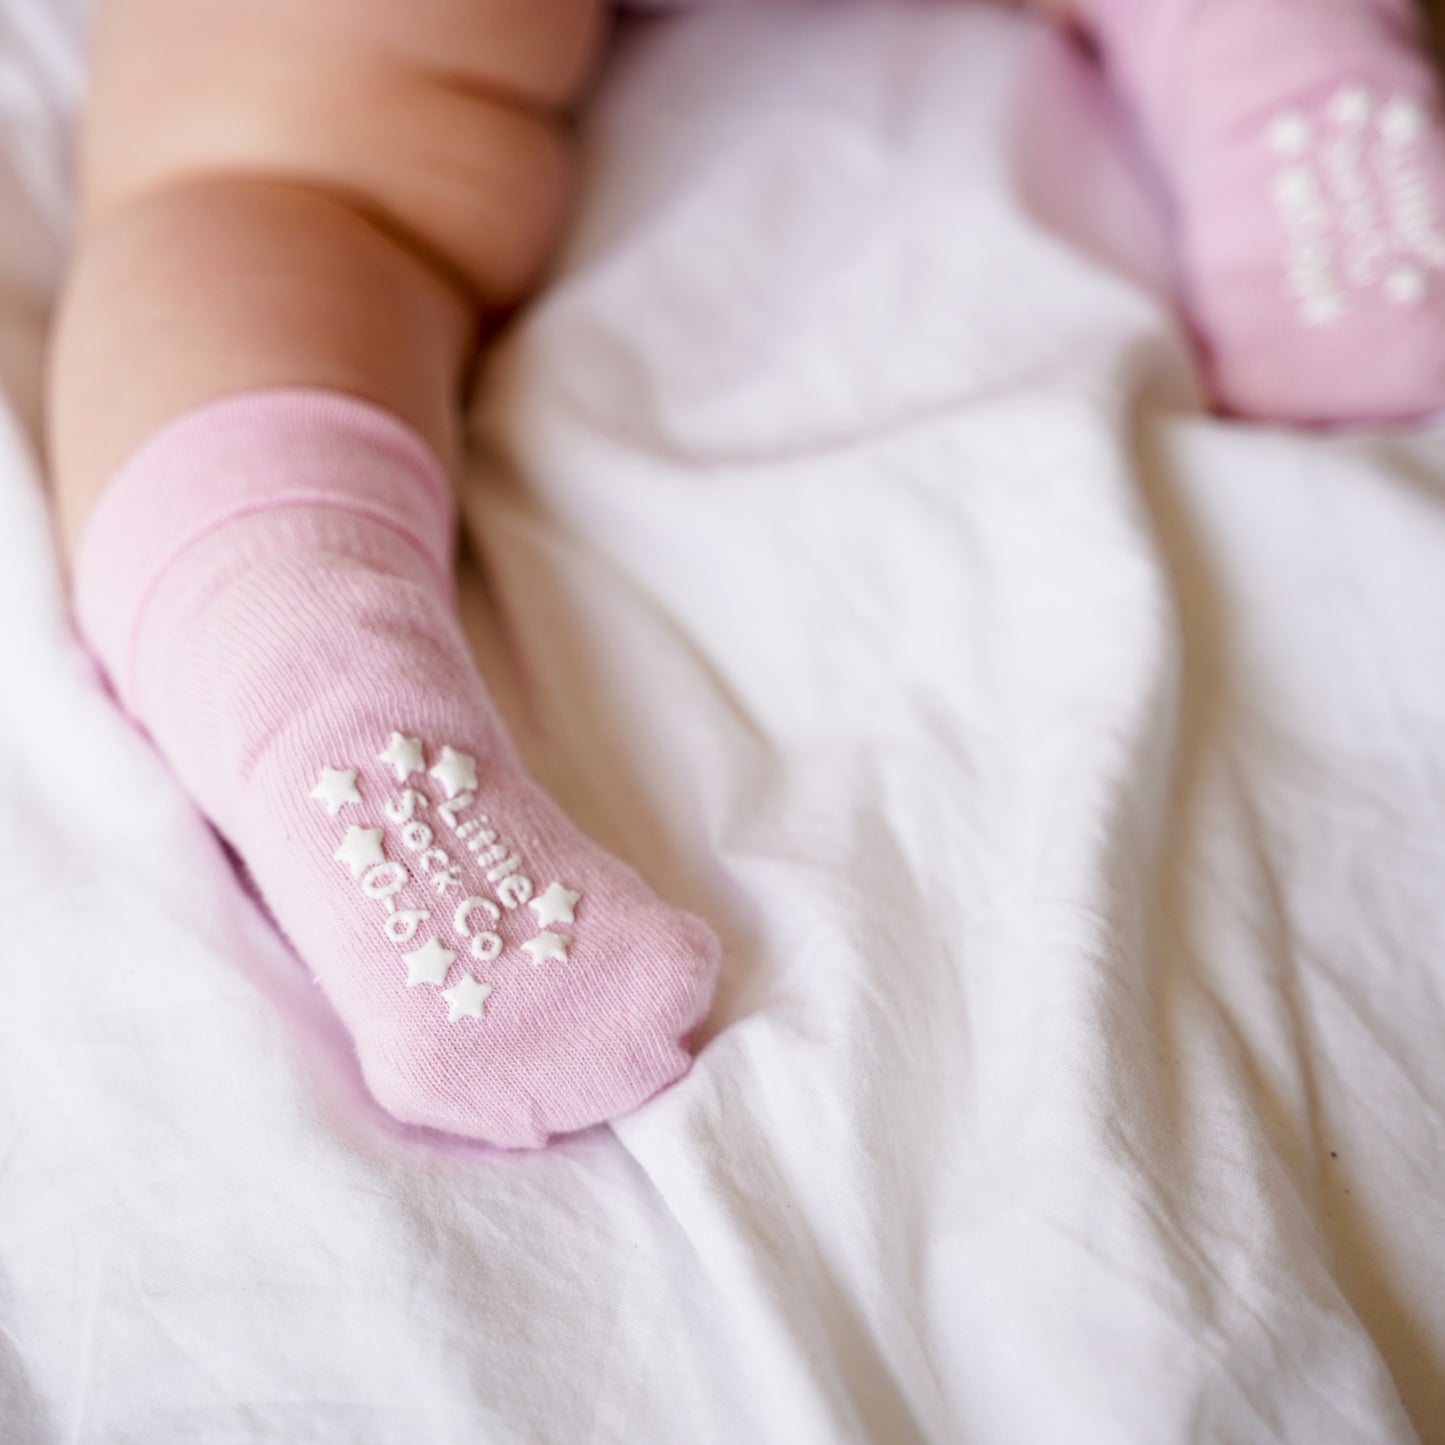 Non Slip Stay On Fairytale Pink Original Socks